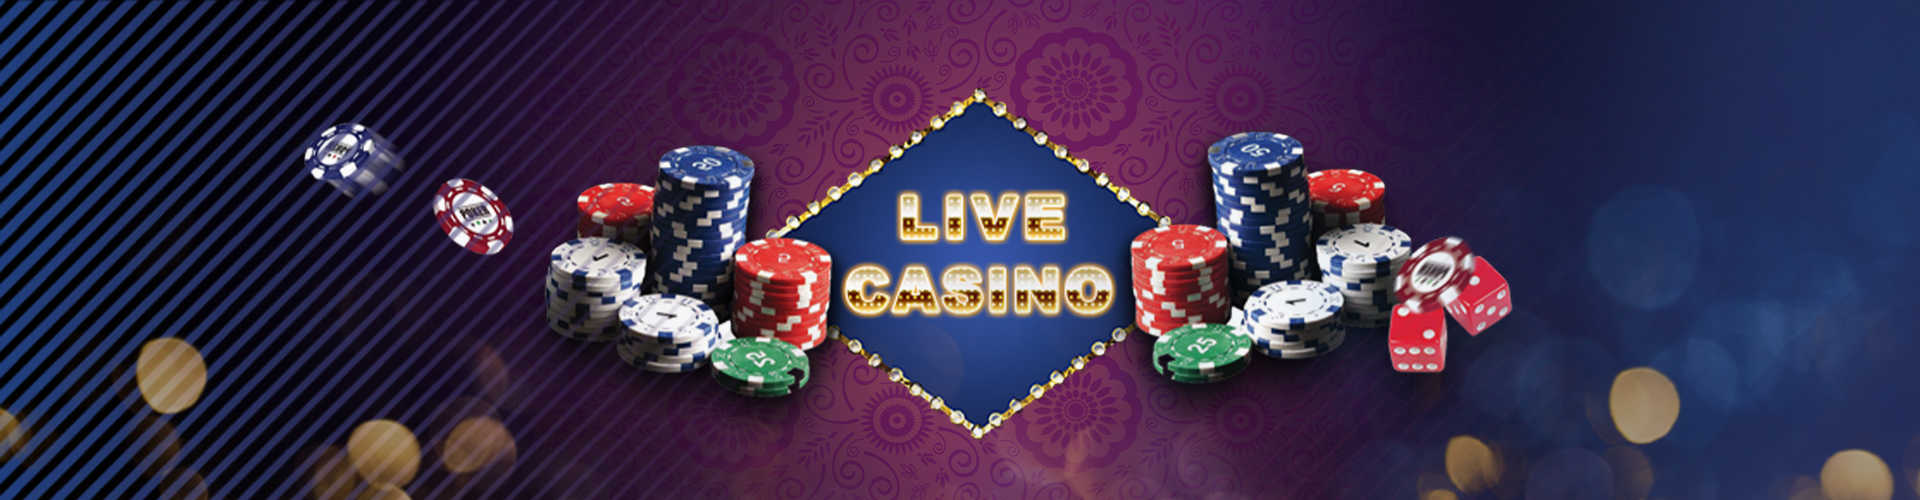 Great Online Casino Games at UWin33